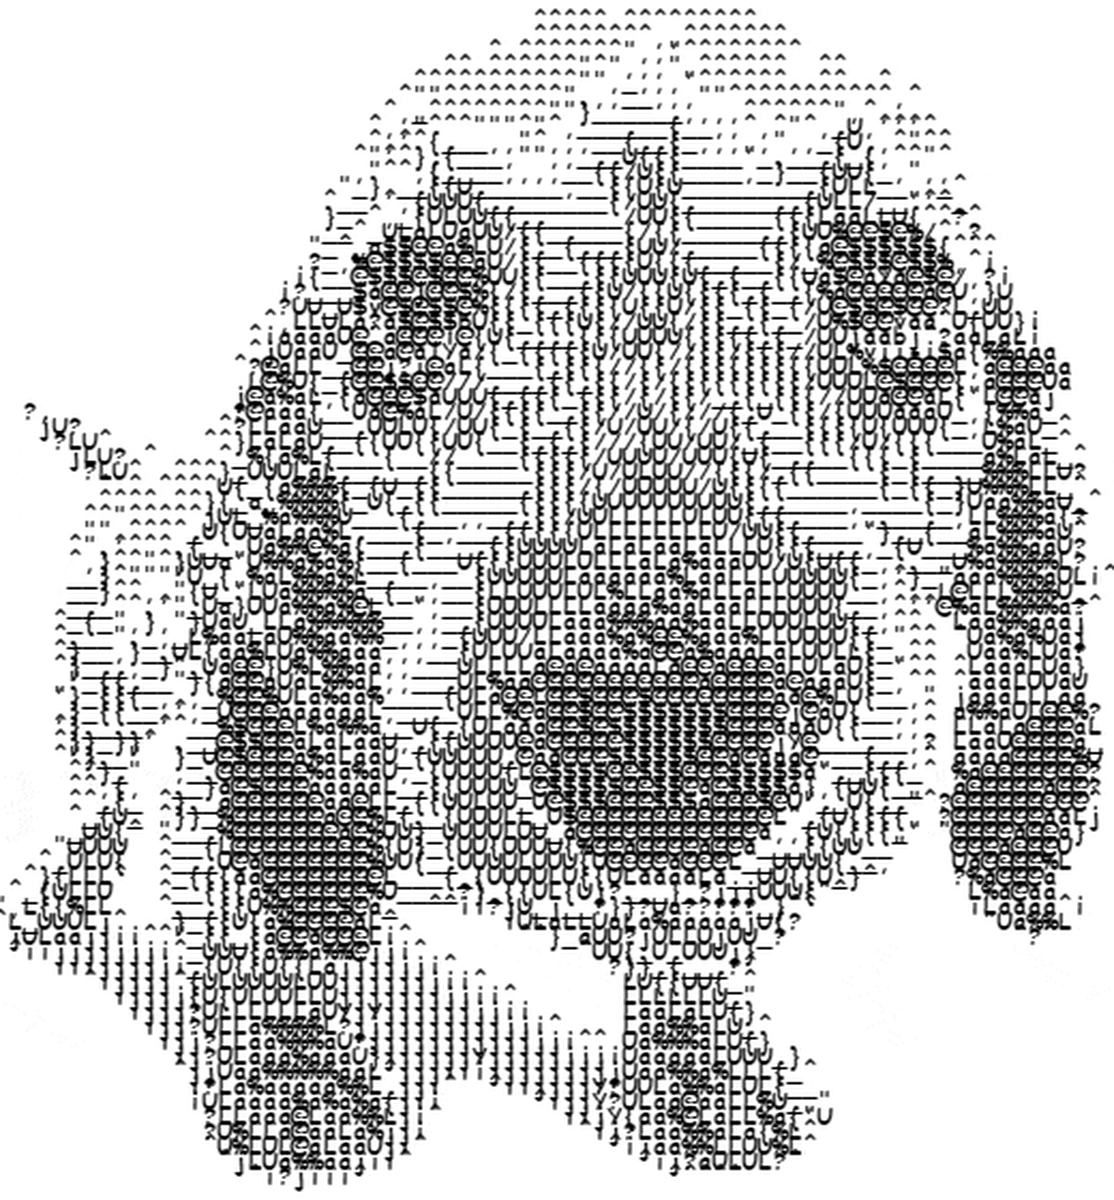 Converted animated dog GIF to  ASCII.